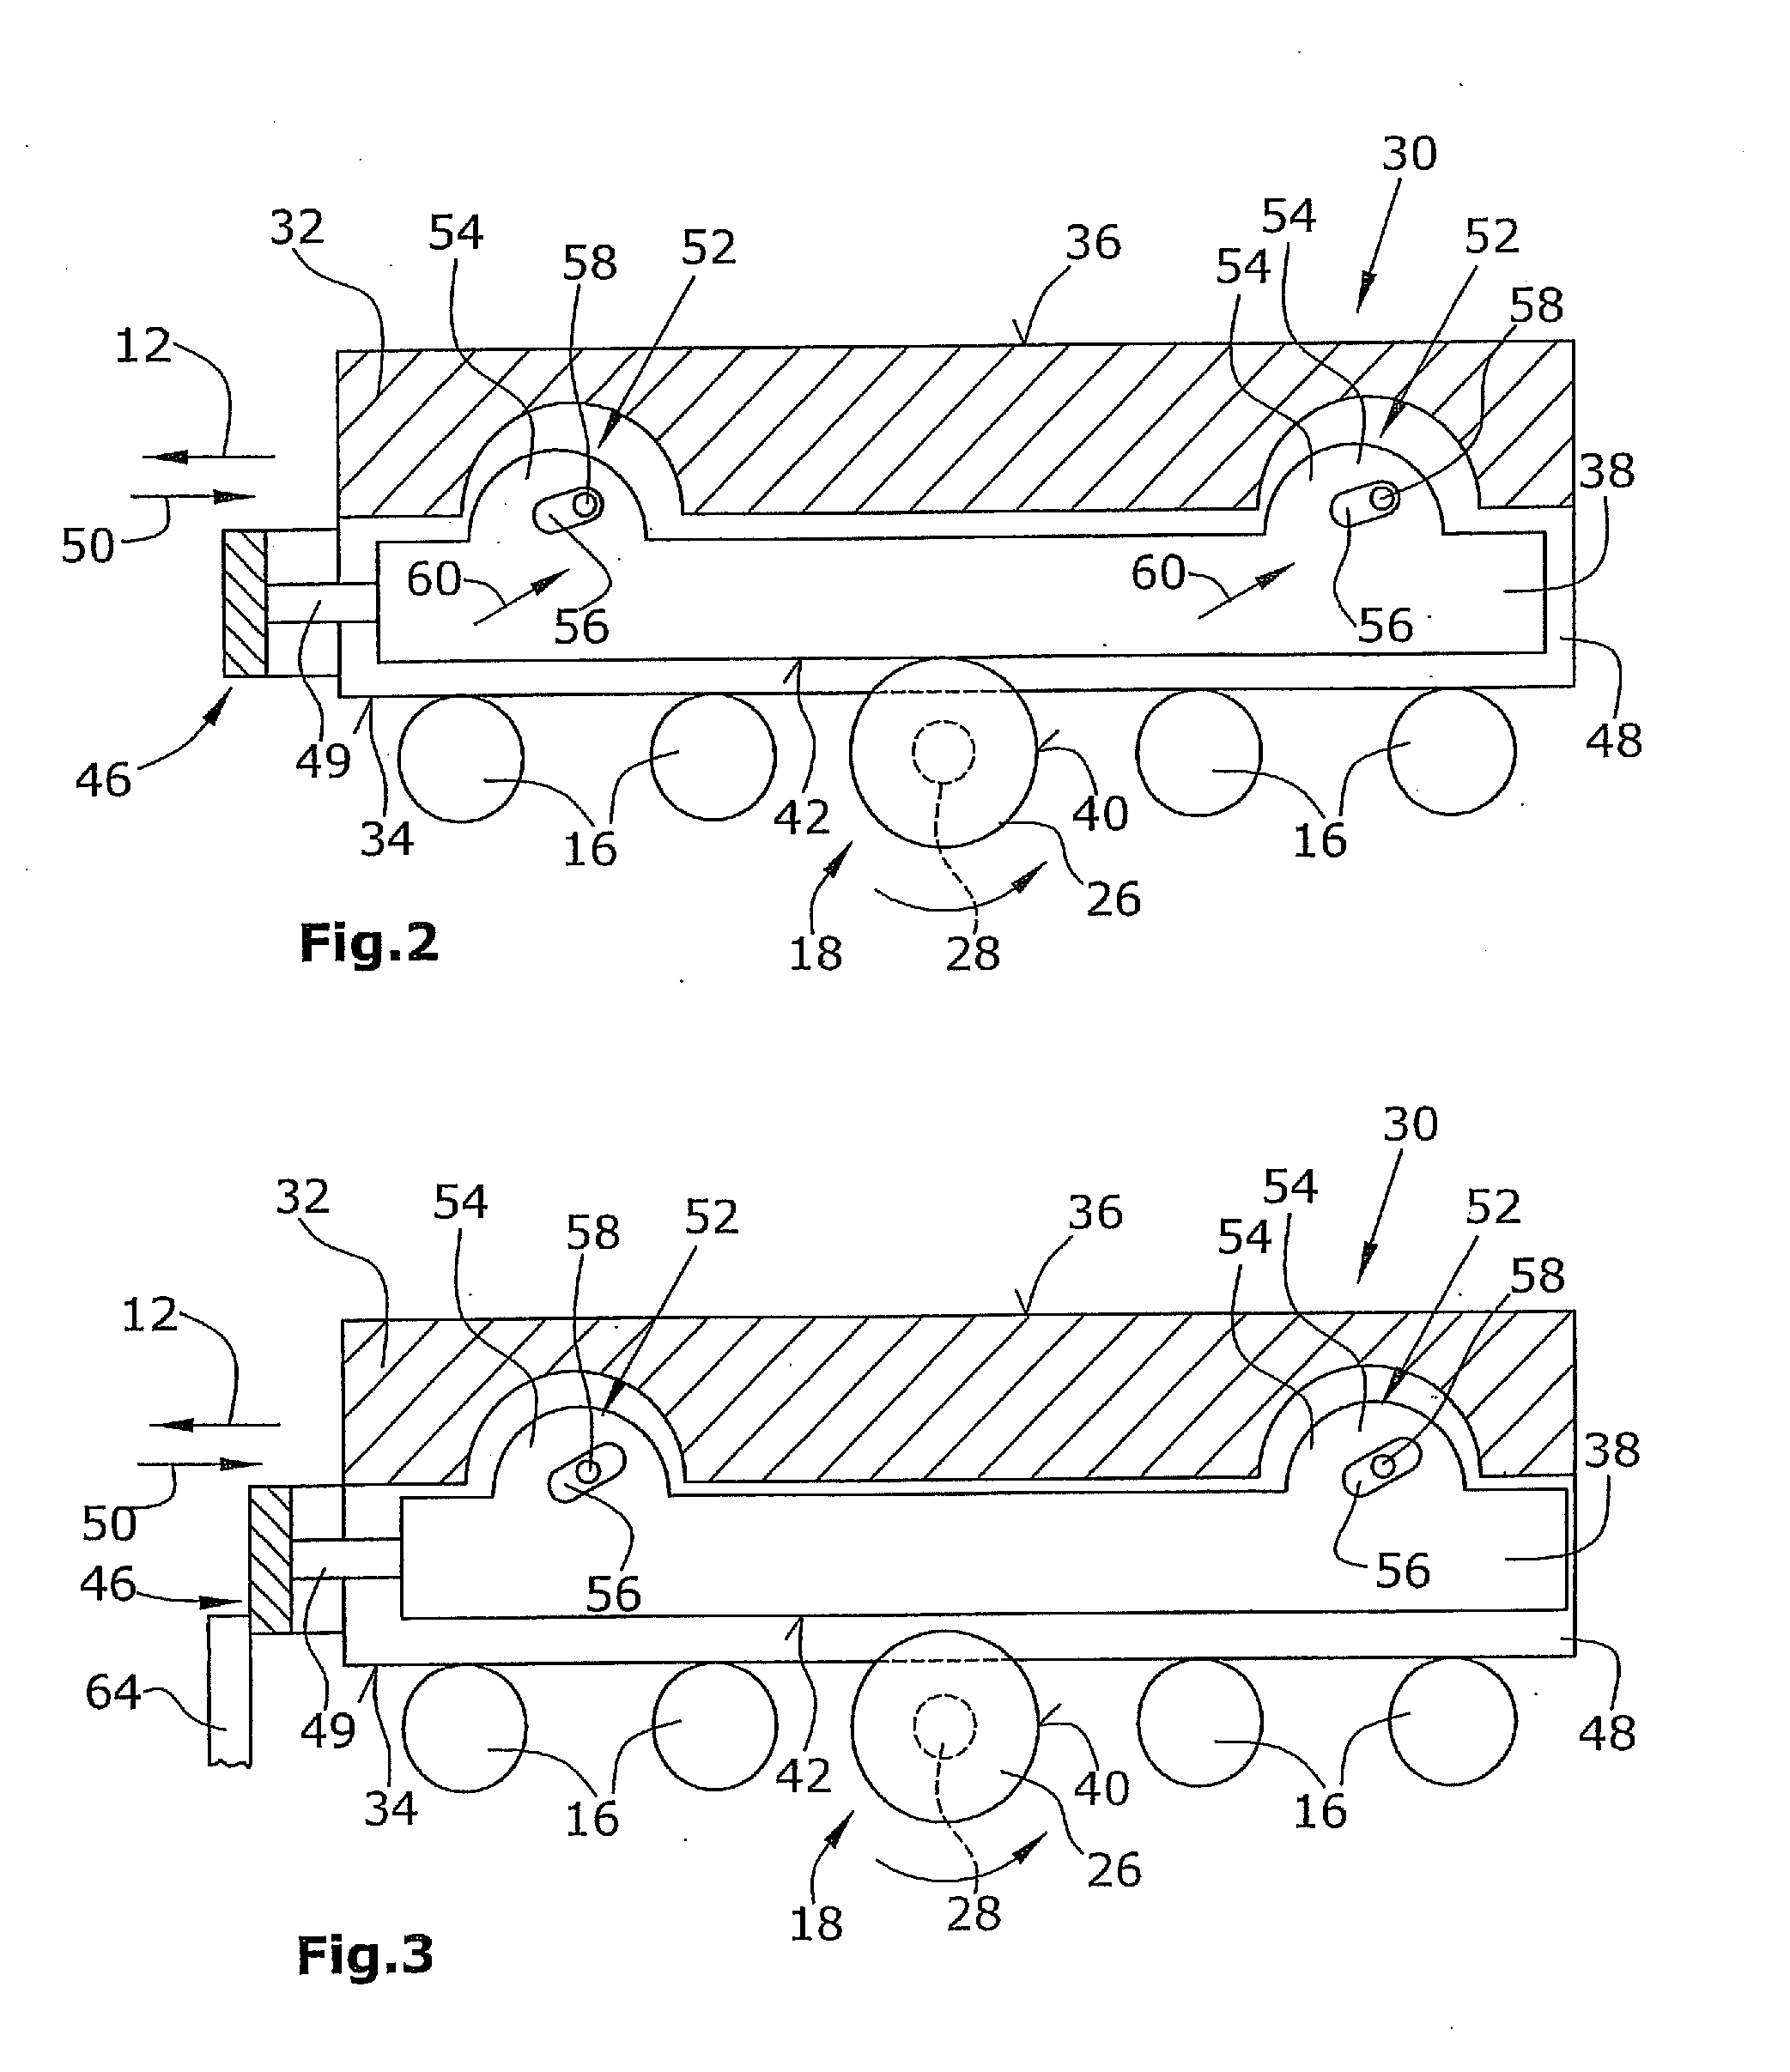 Conveyor system